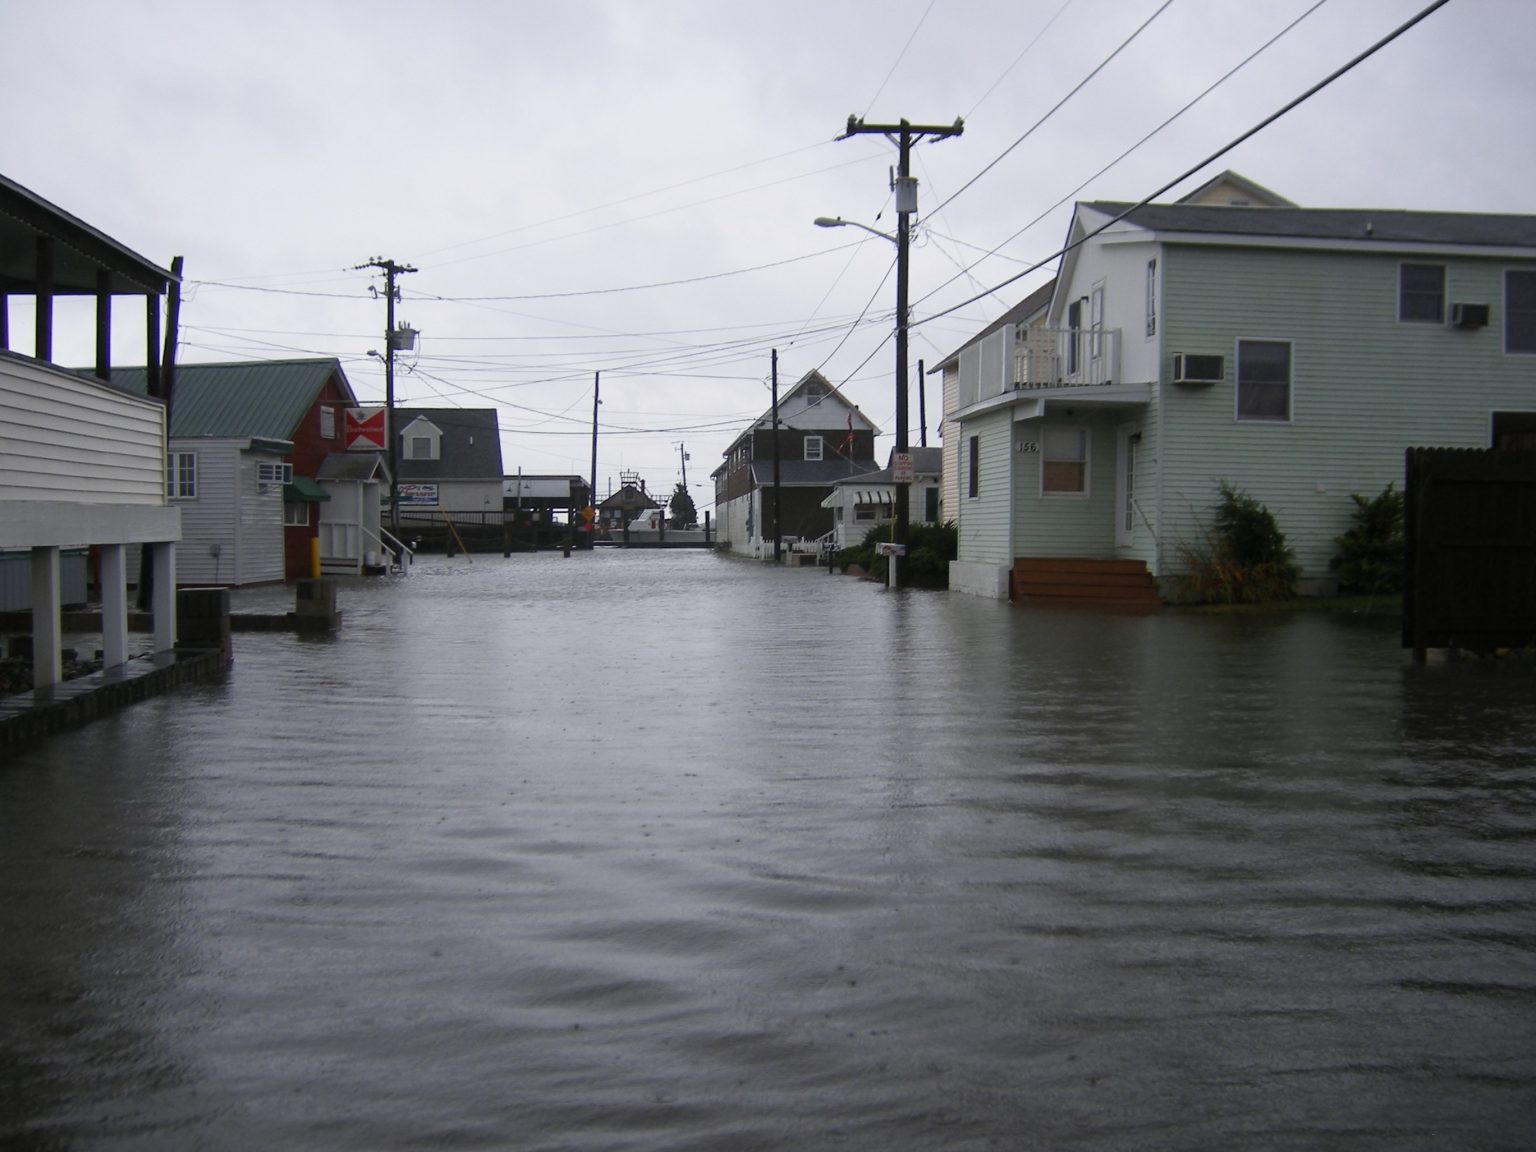 A flooded residential street in a beach town.